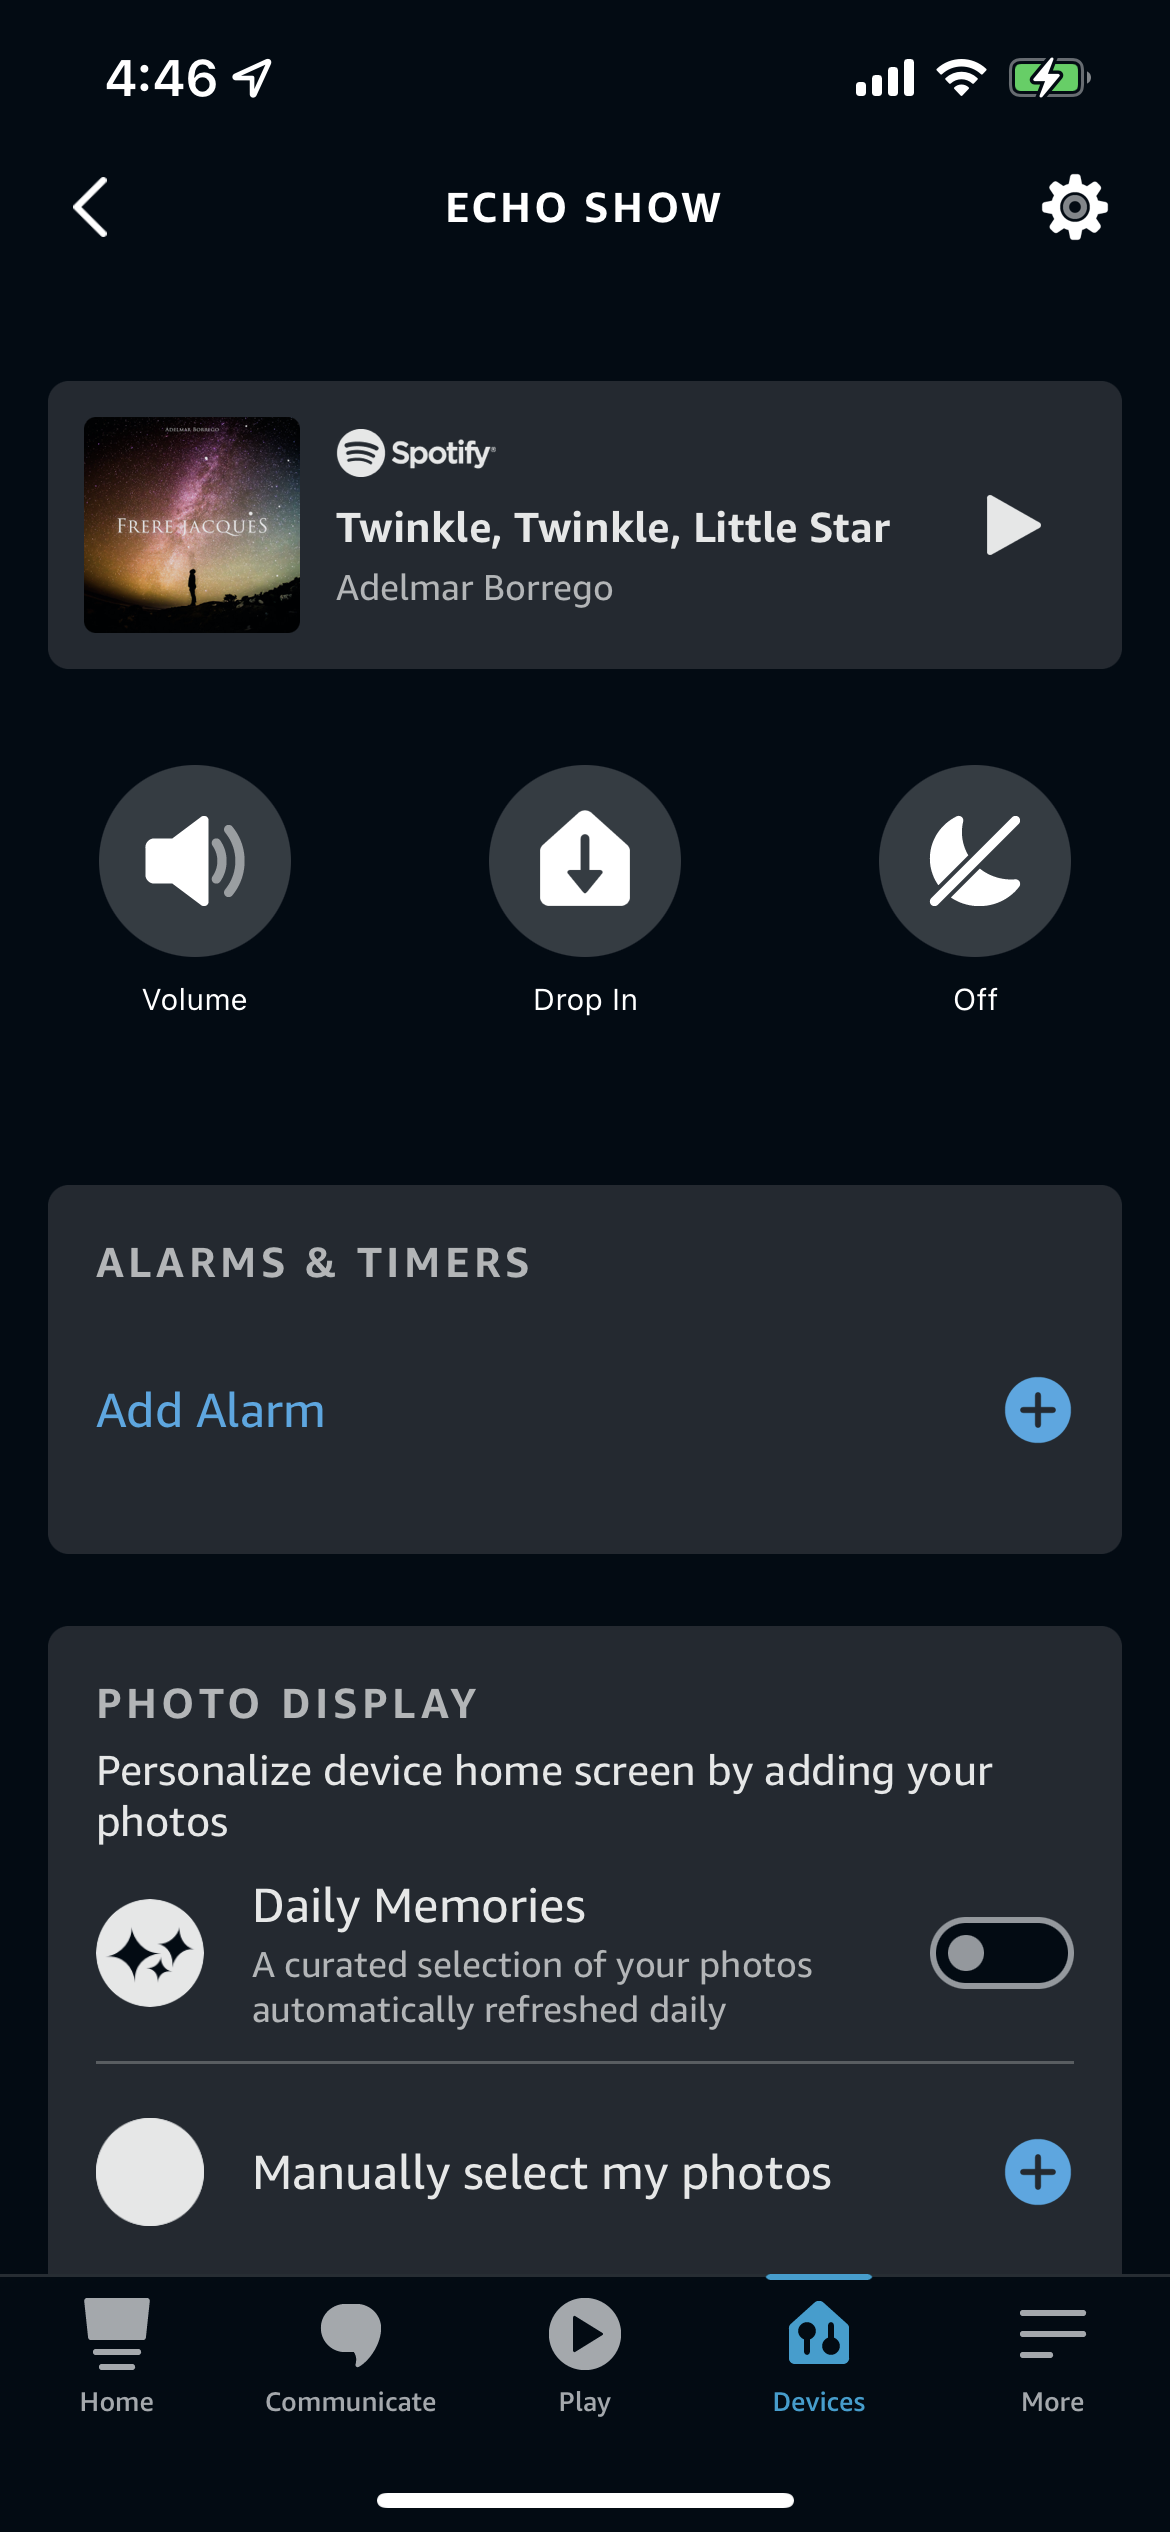 Echo Show controls in the Alexa app